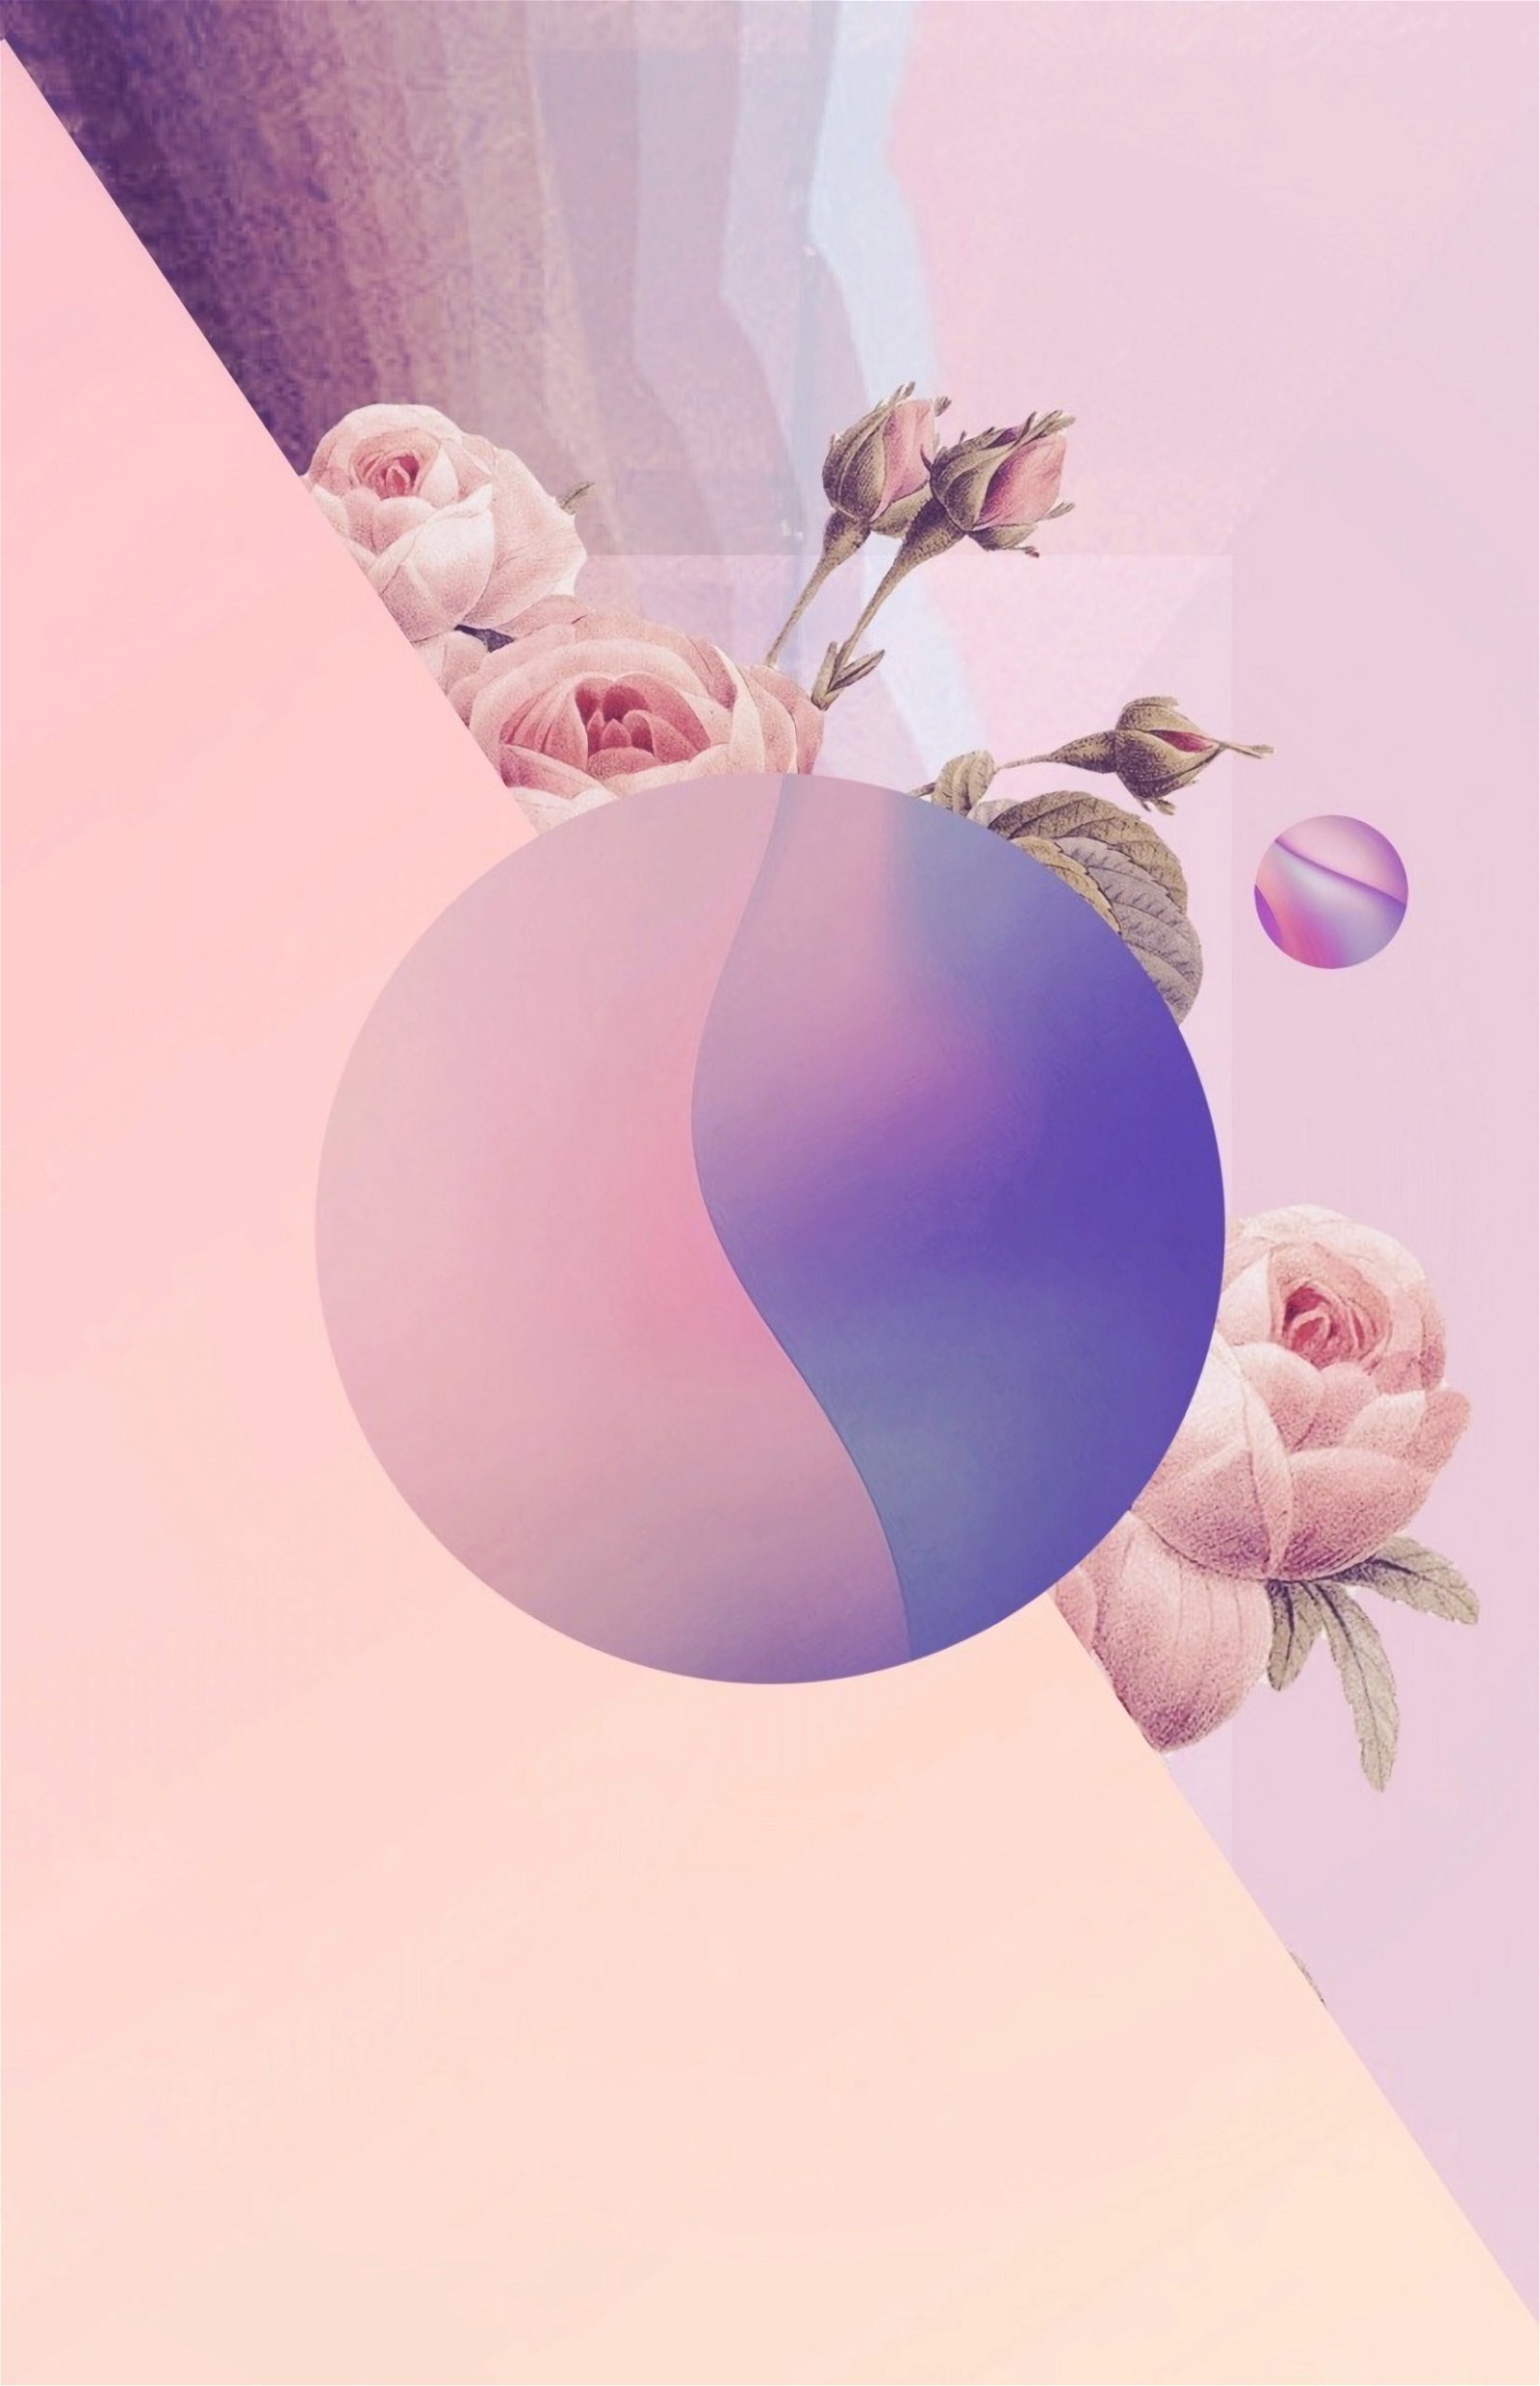 Aesthetic Wallpaper for iPhone (+ Vaporwave / Pastel Kawaii)